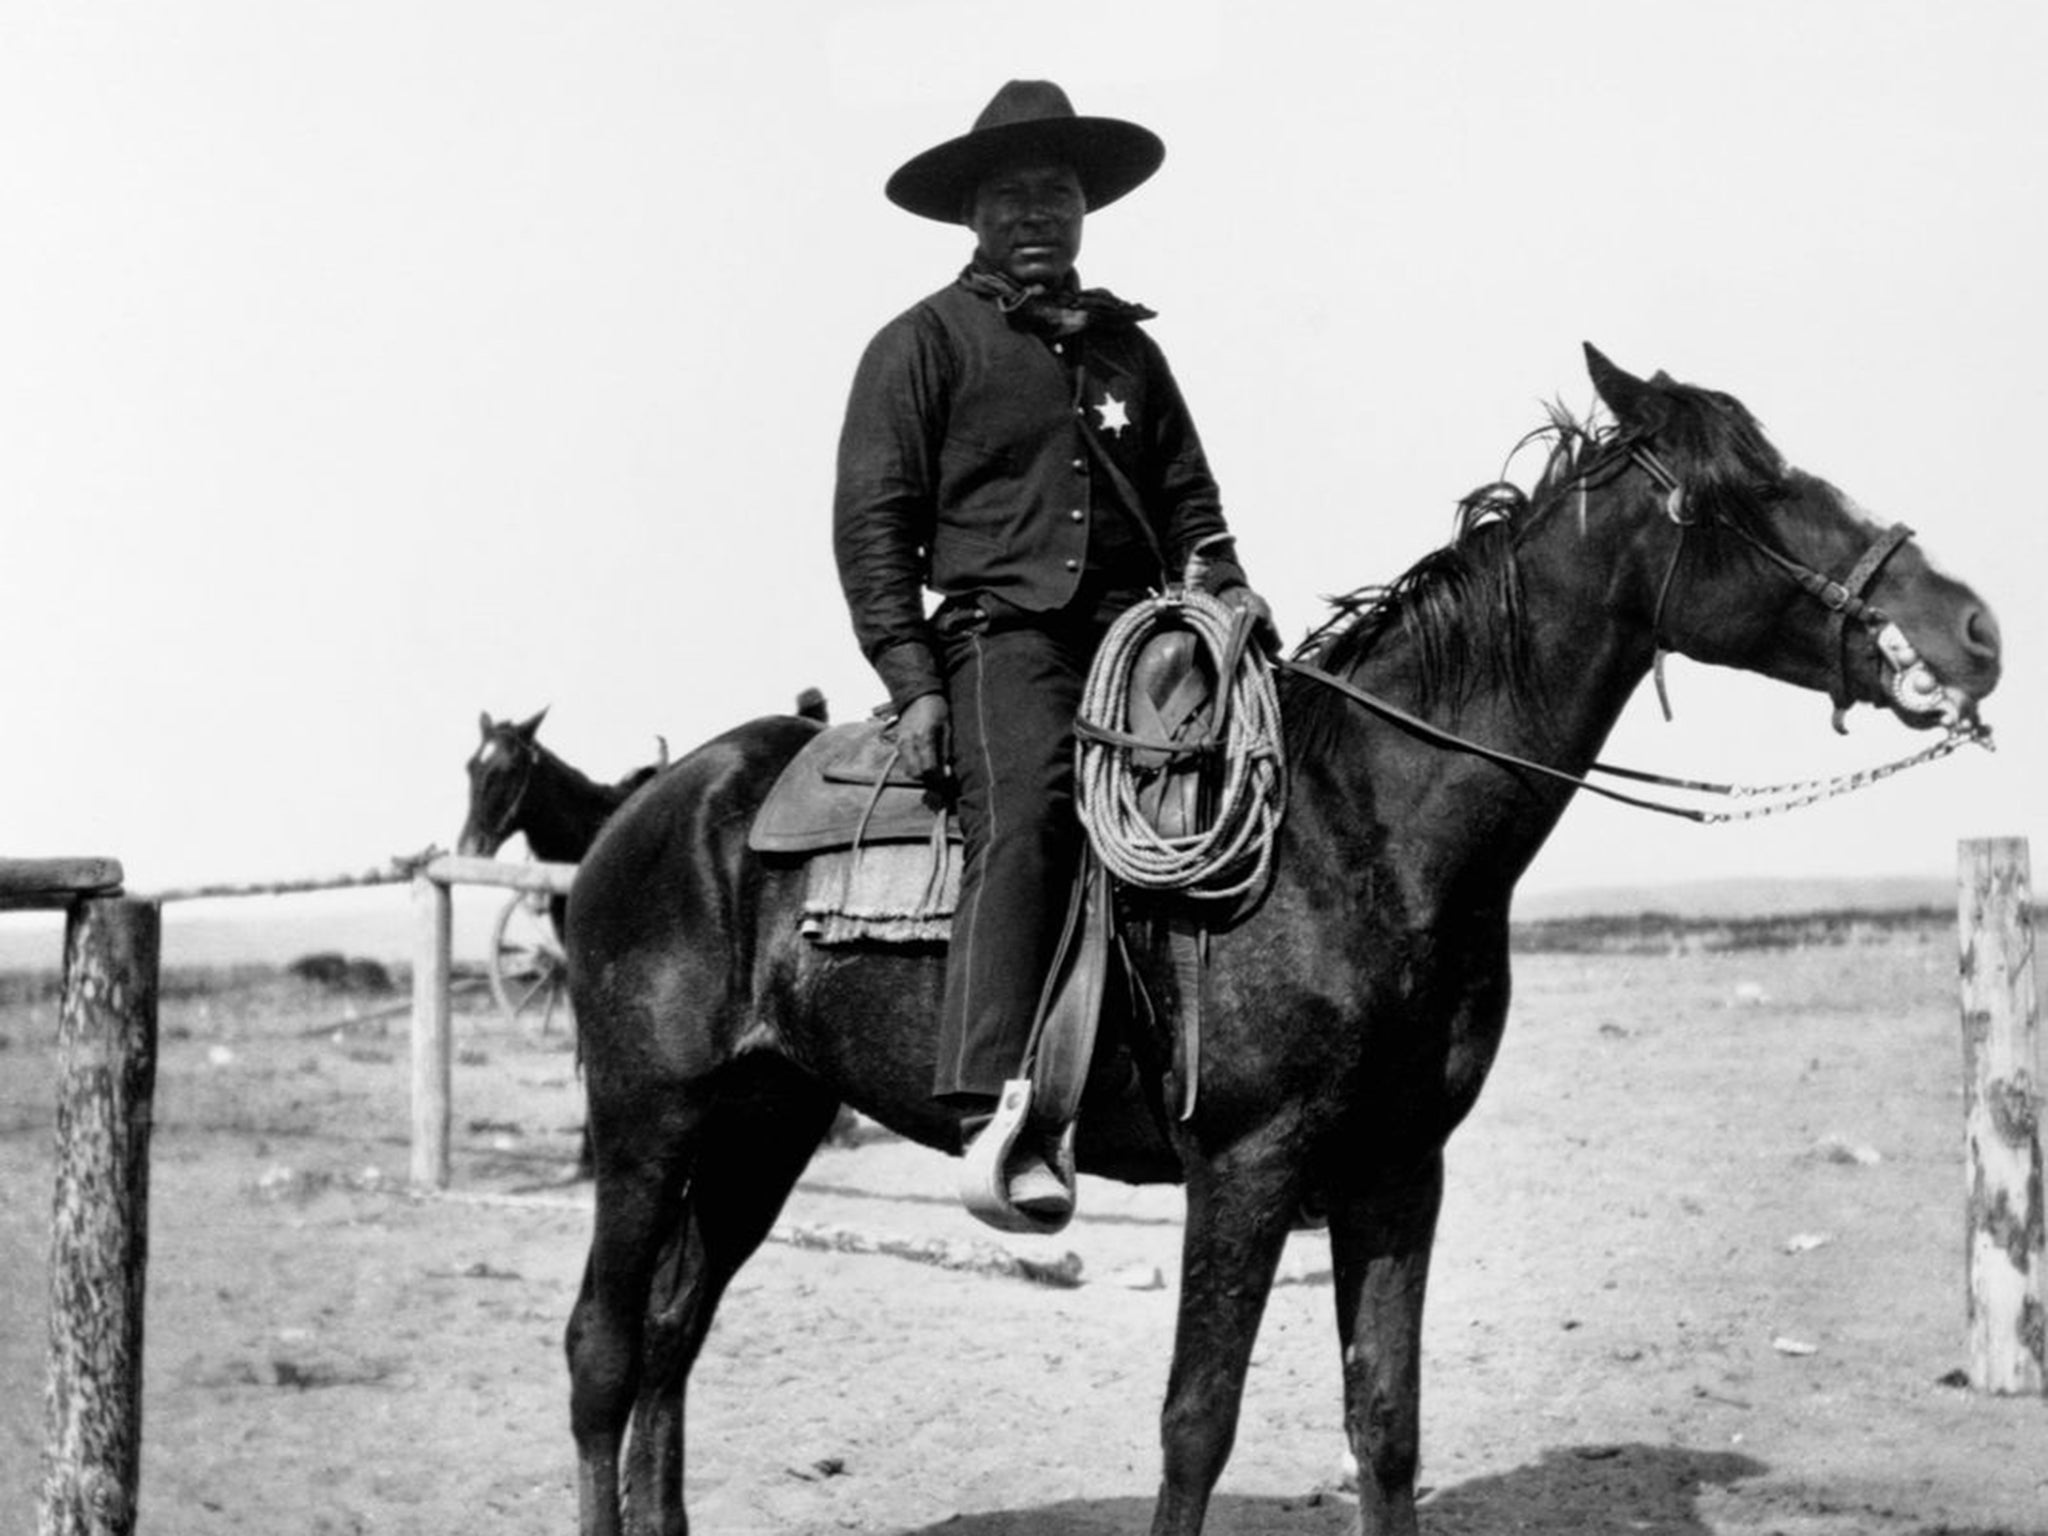 An African American sheriff in Pocatello, Idaho, in 1903